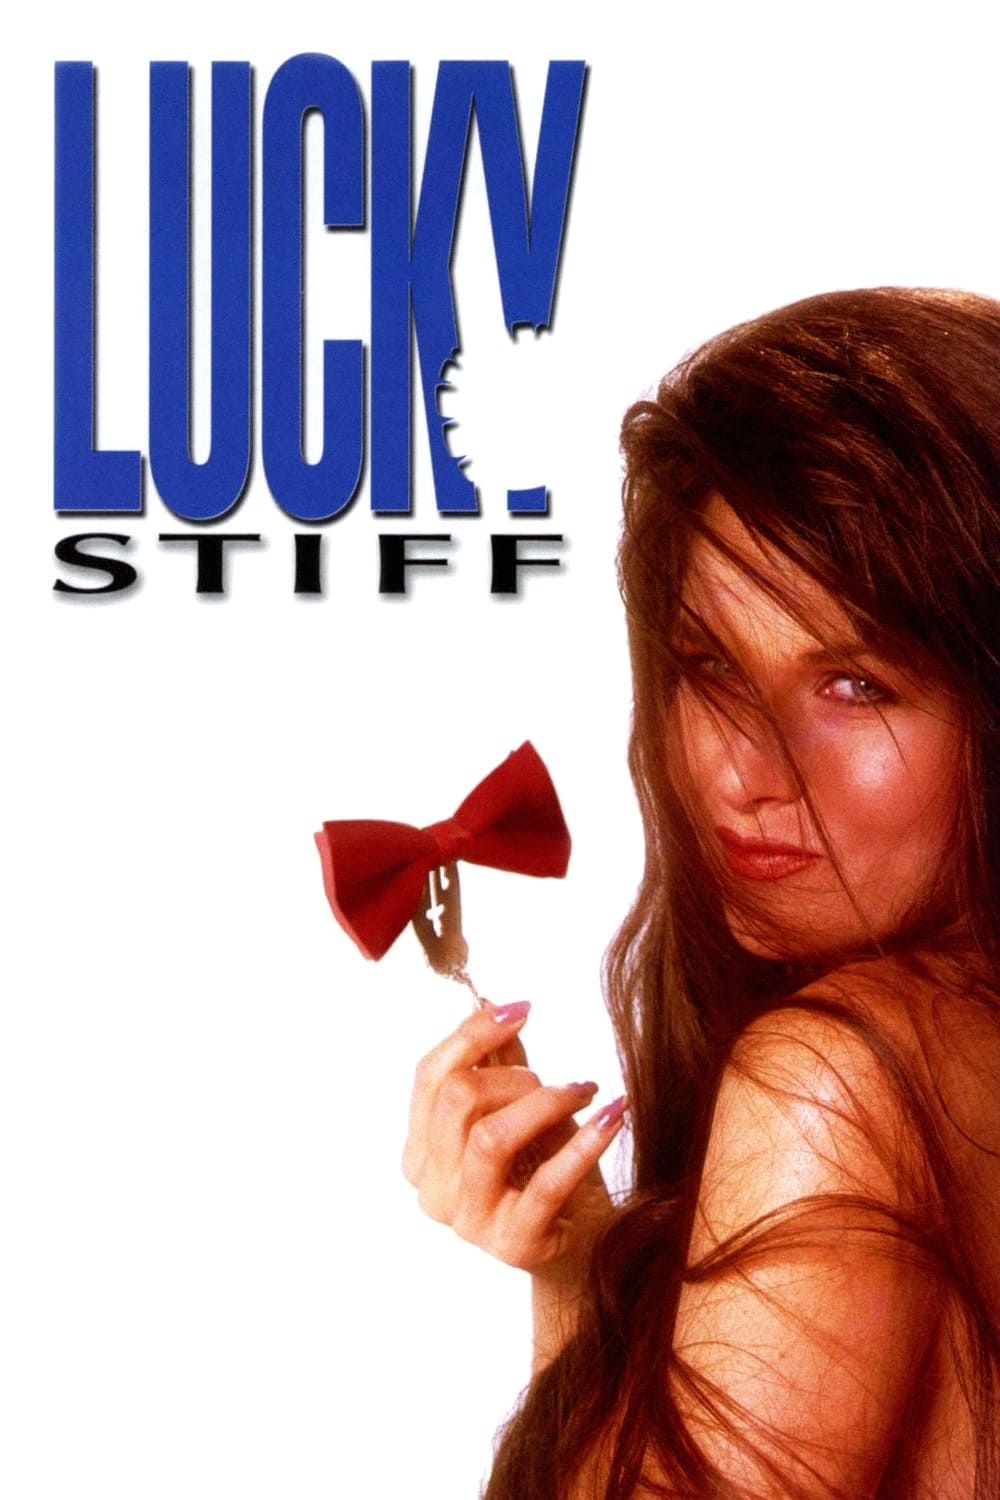 Lucky Stiff (1988)